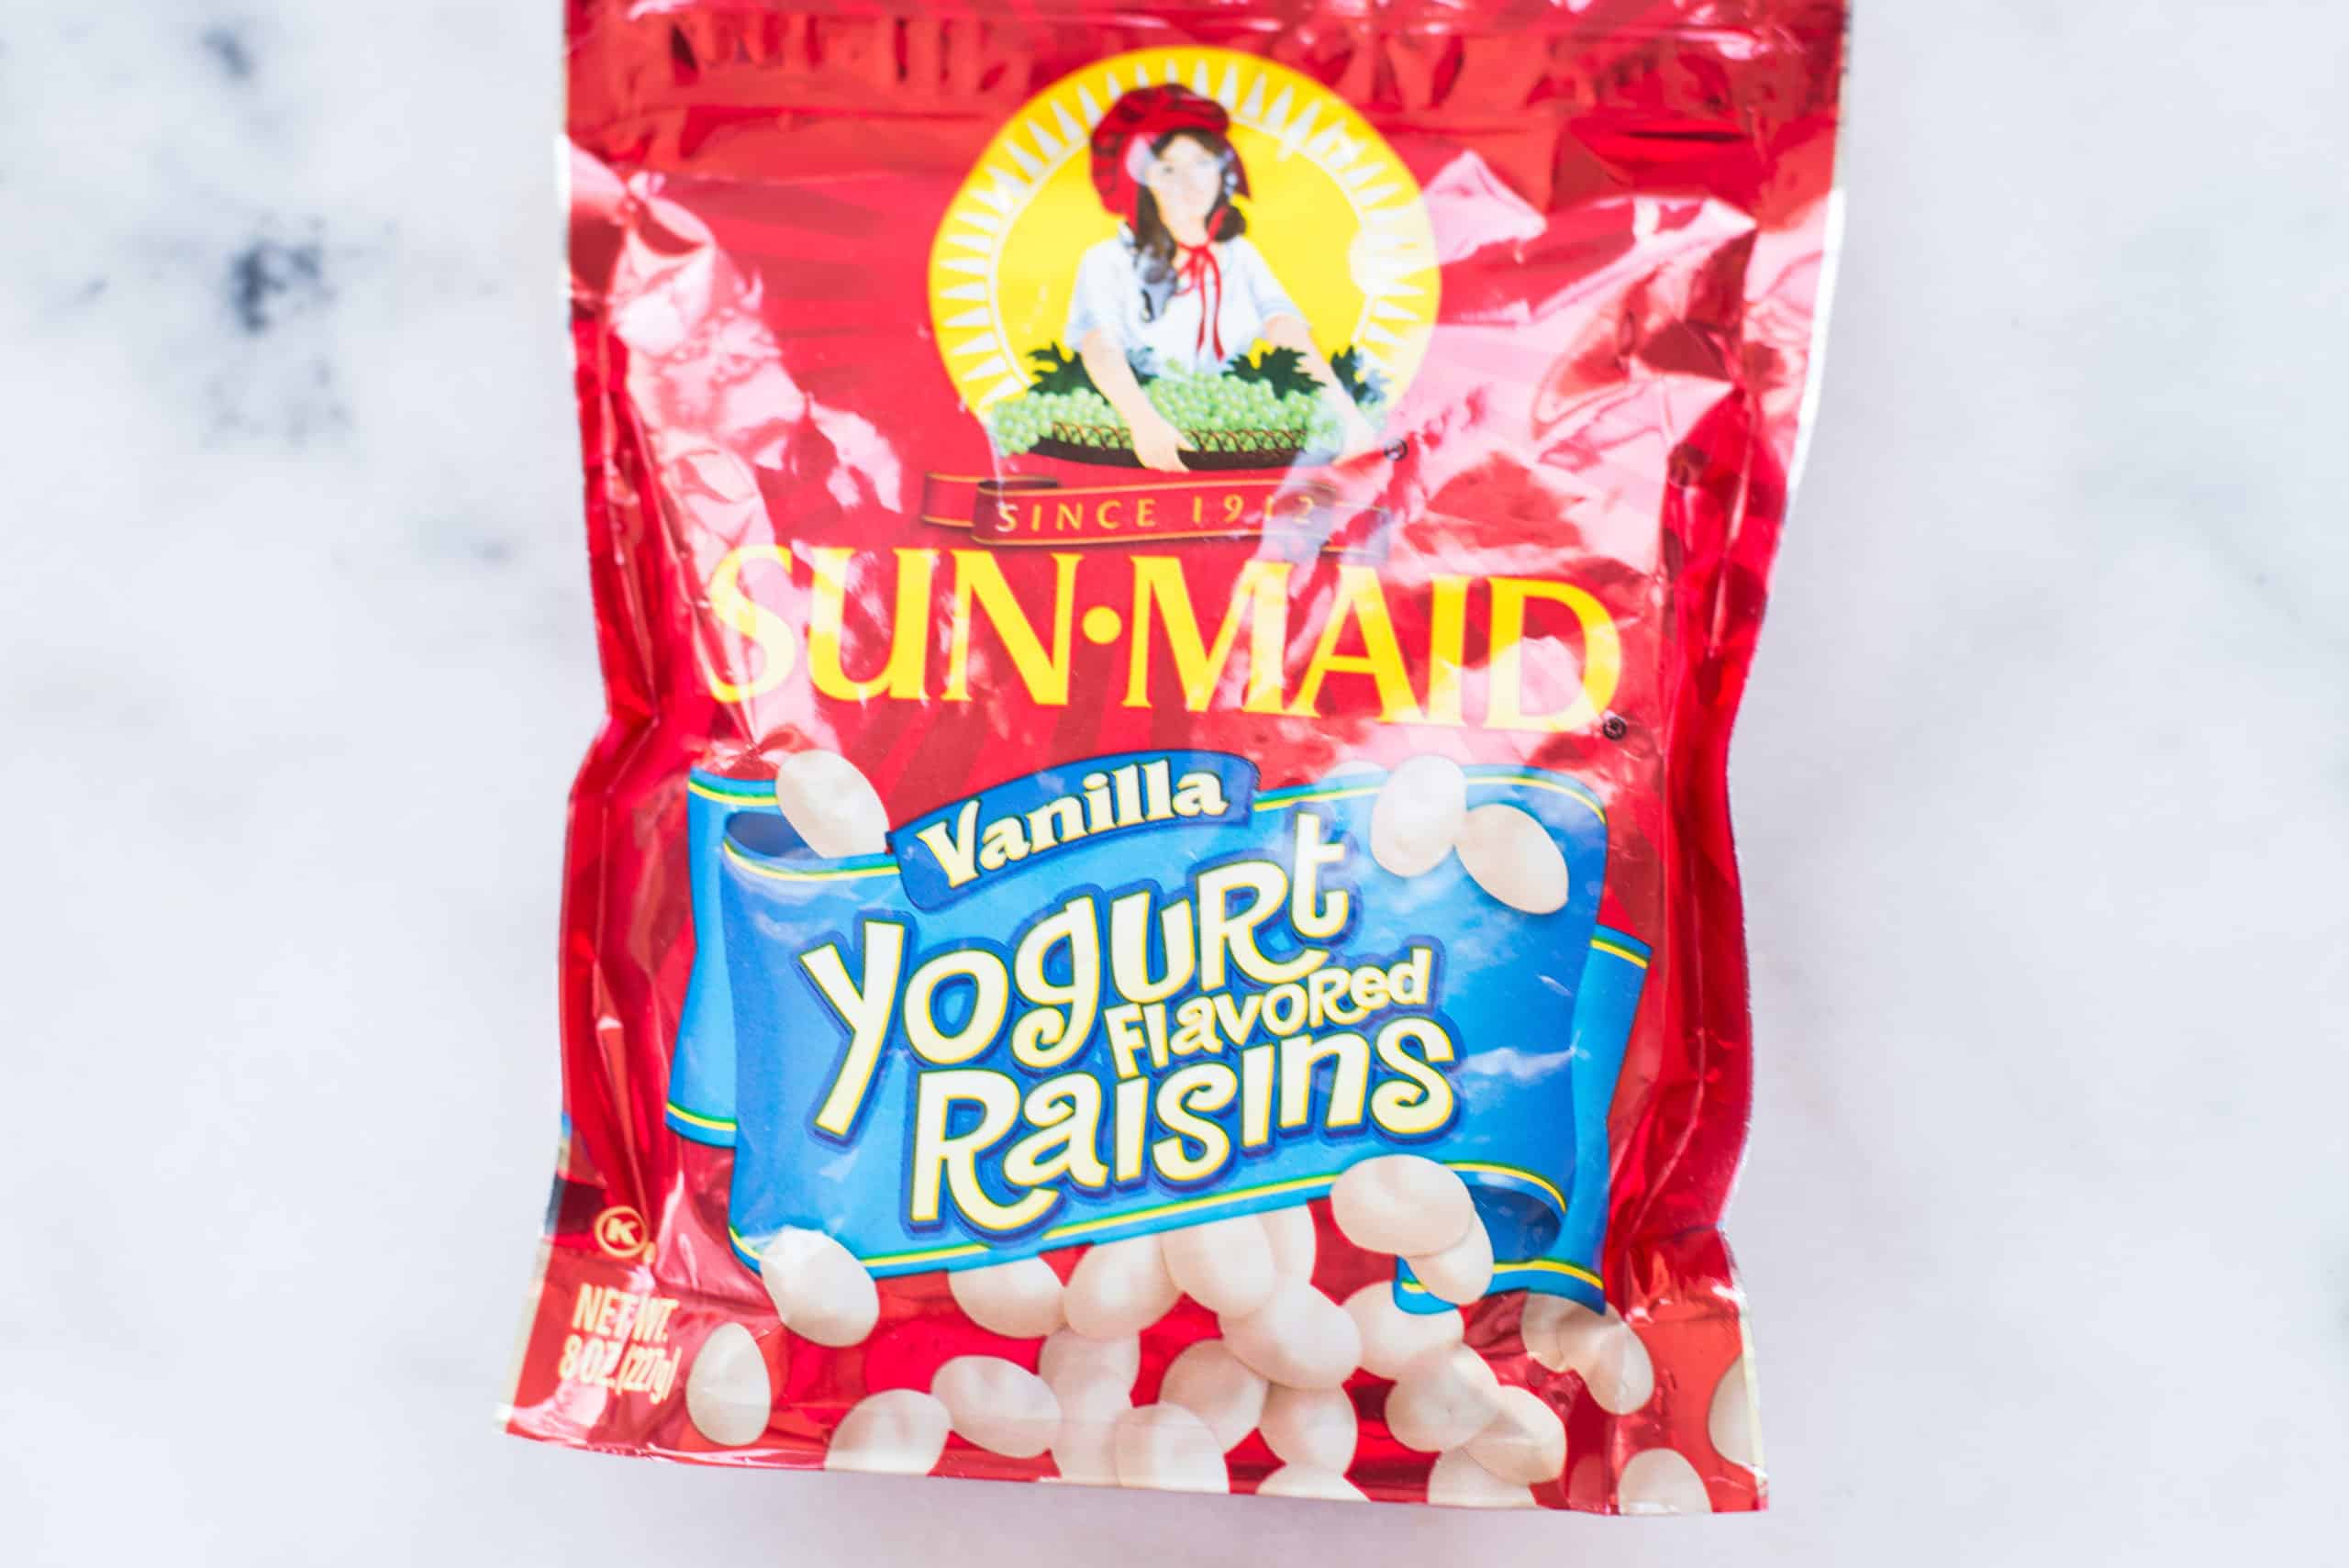 Image of sugary, processed yogurt flavored raisins, an inflammatory food.